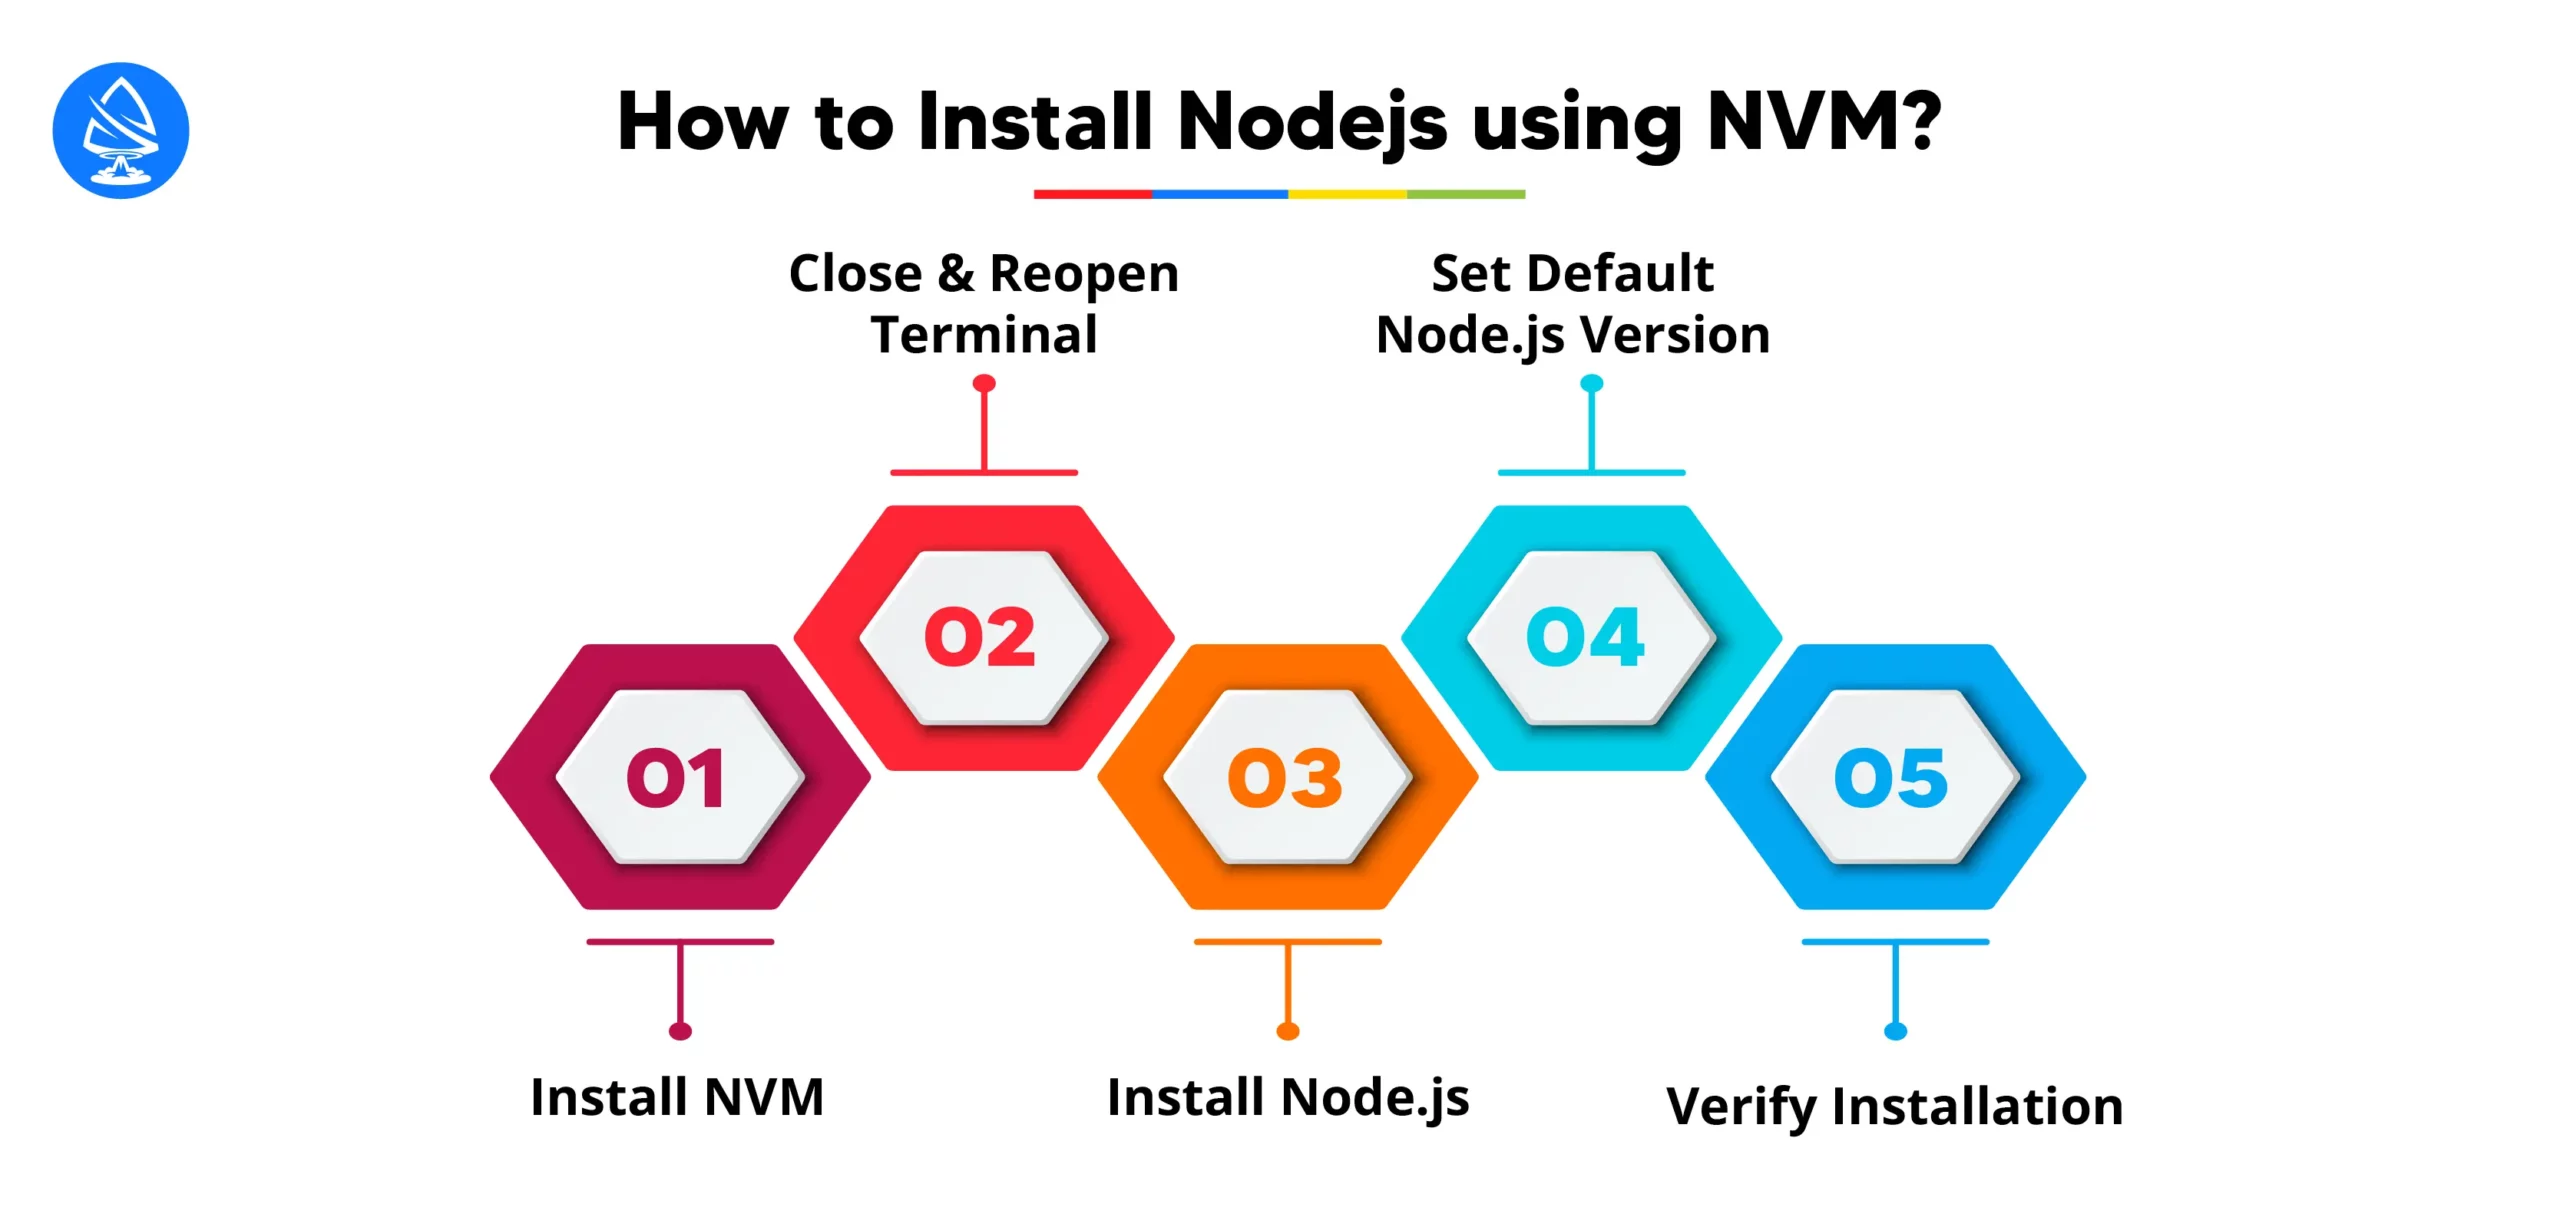 How to Install Nodejs using NVM? 